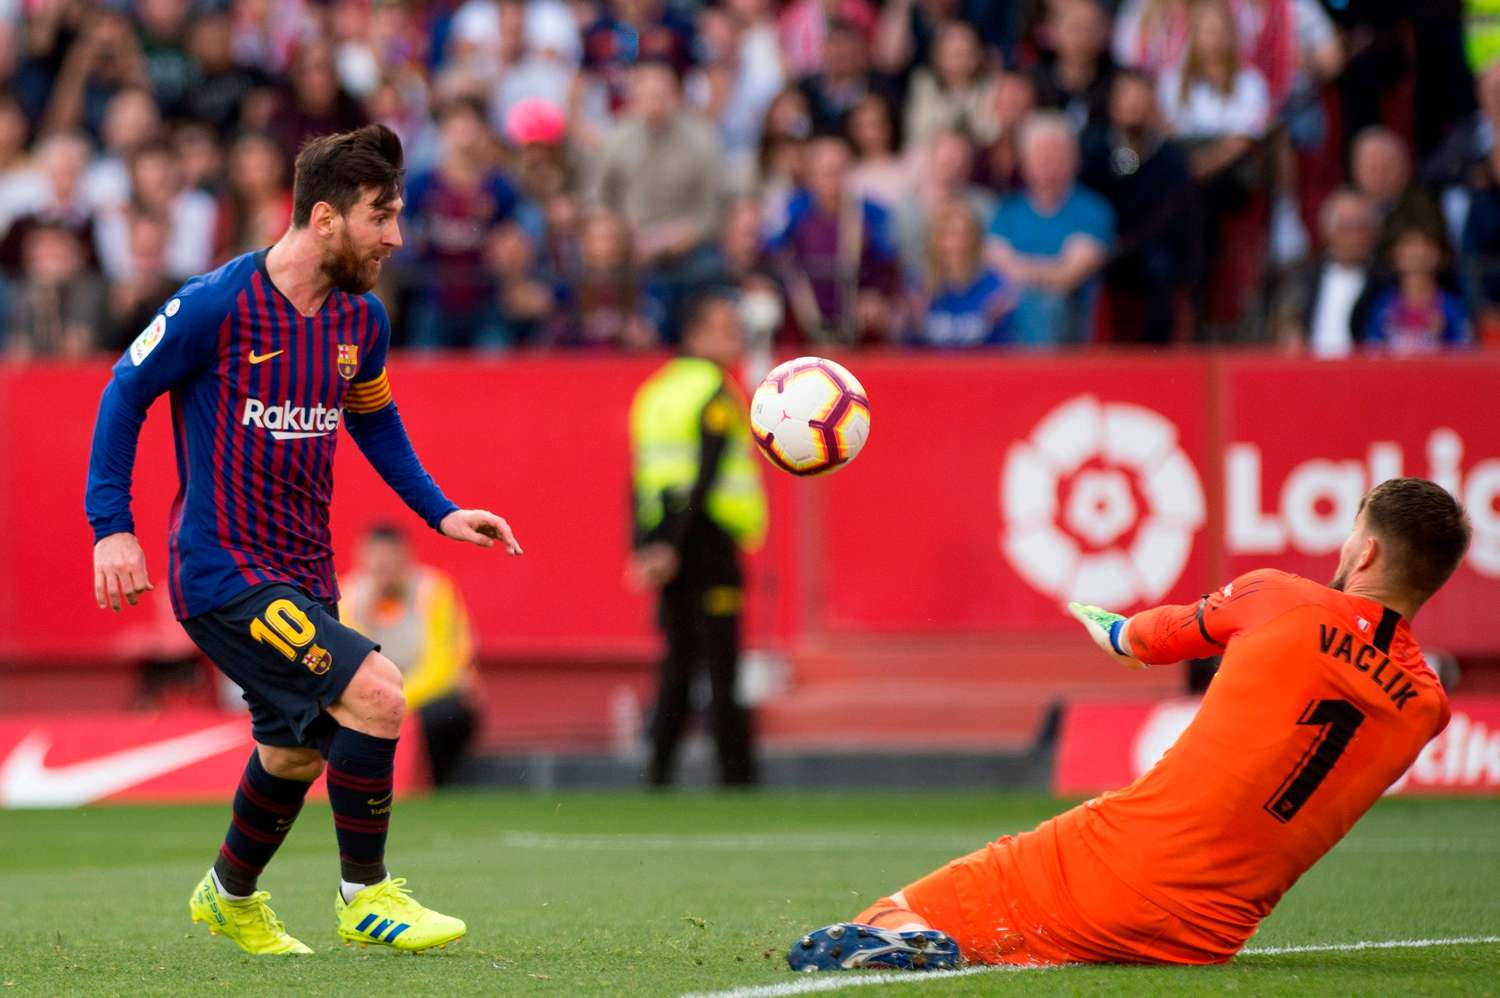 Triunfo de Barcelona, con un Messi descollante